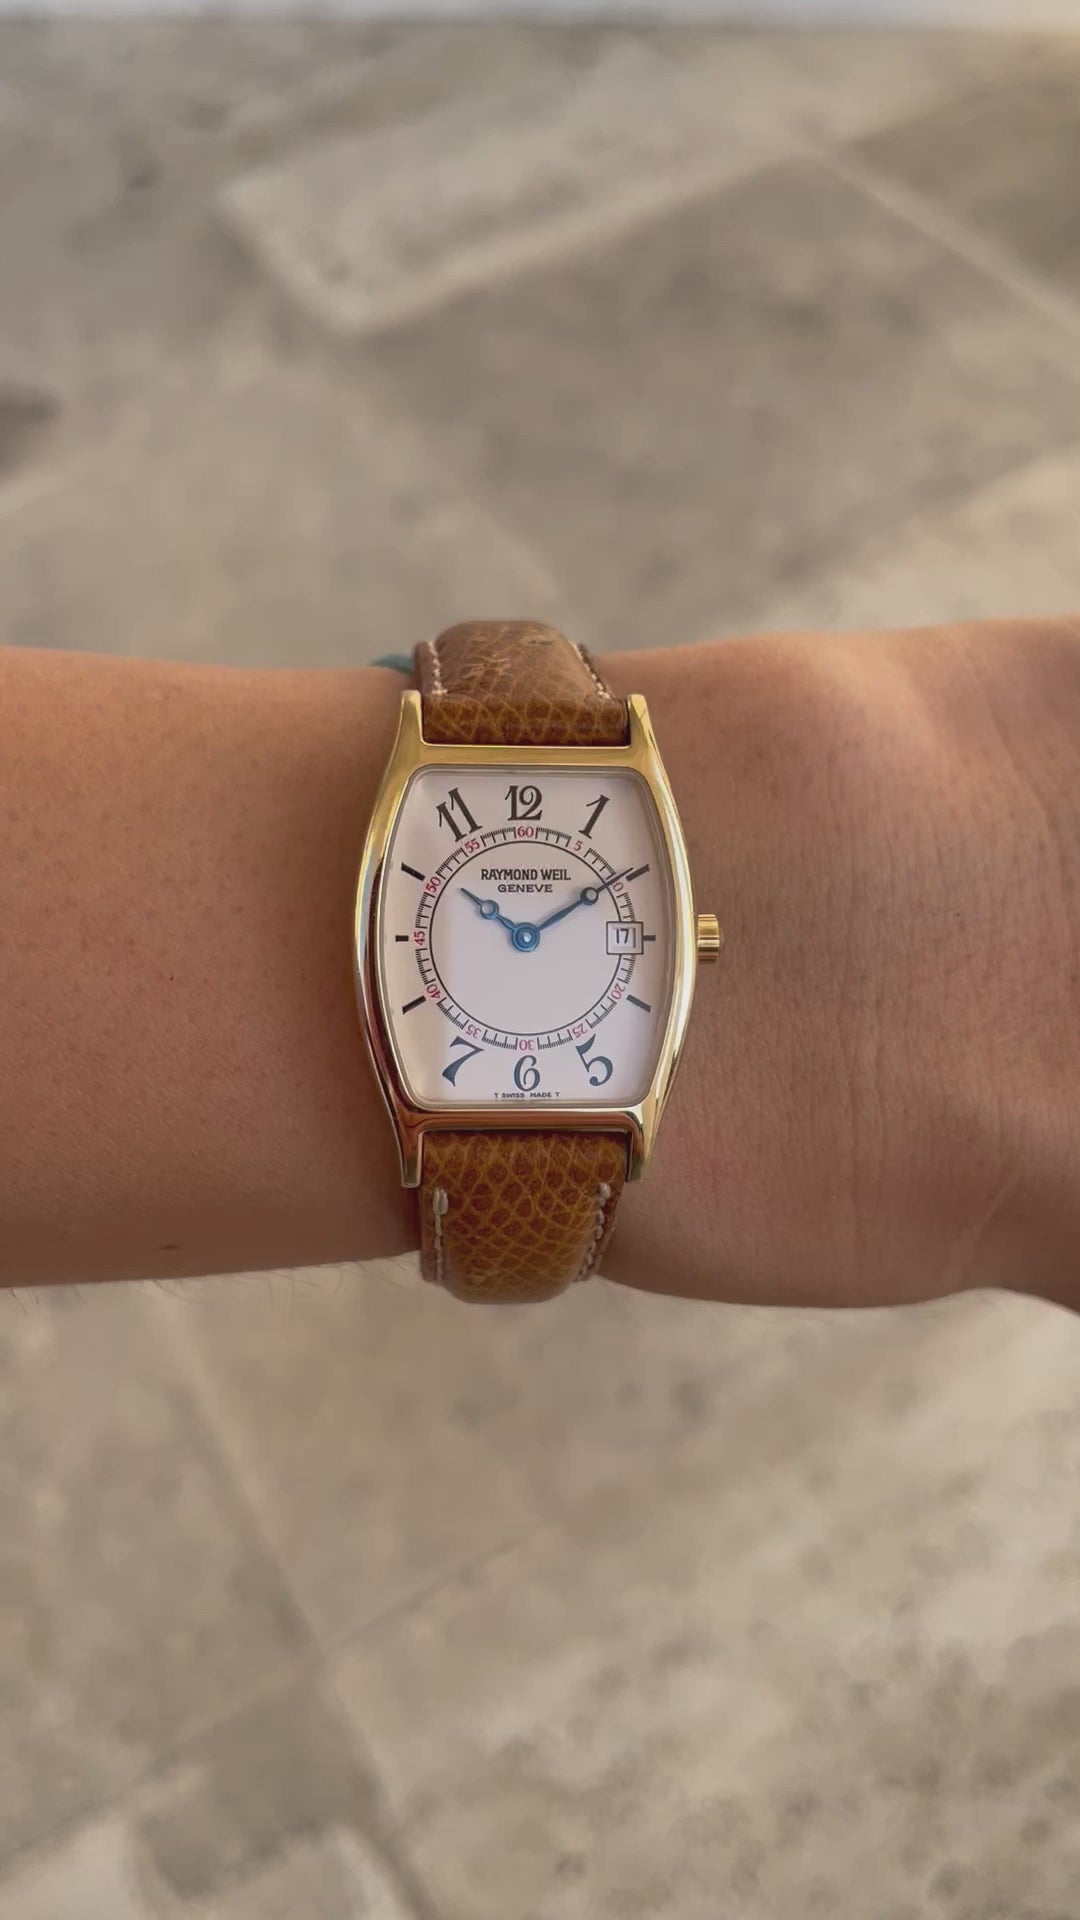 Raymond Weil Vintage Ladies Watch: 80s Gold Rectangular Style - New Old Stock (NOS), Wrist Shot Video